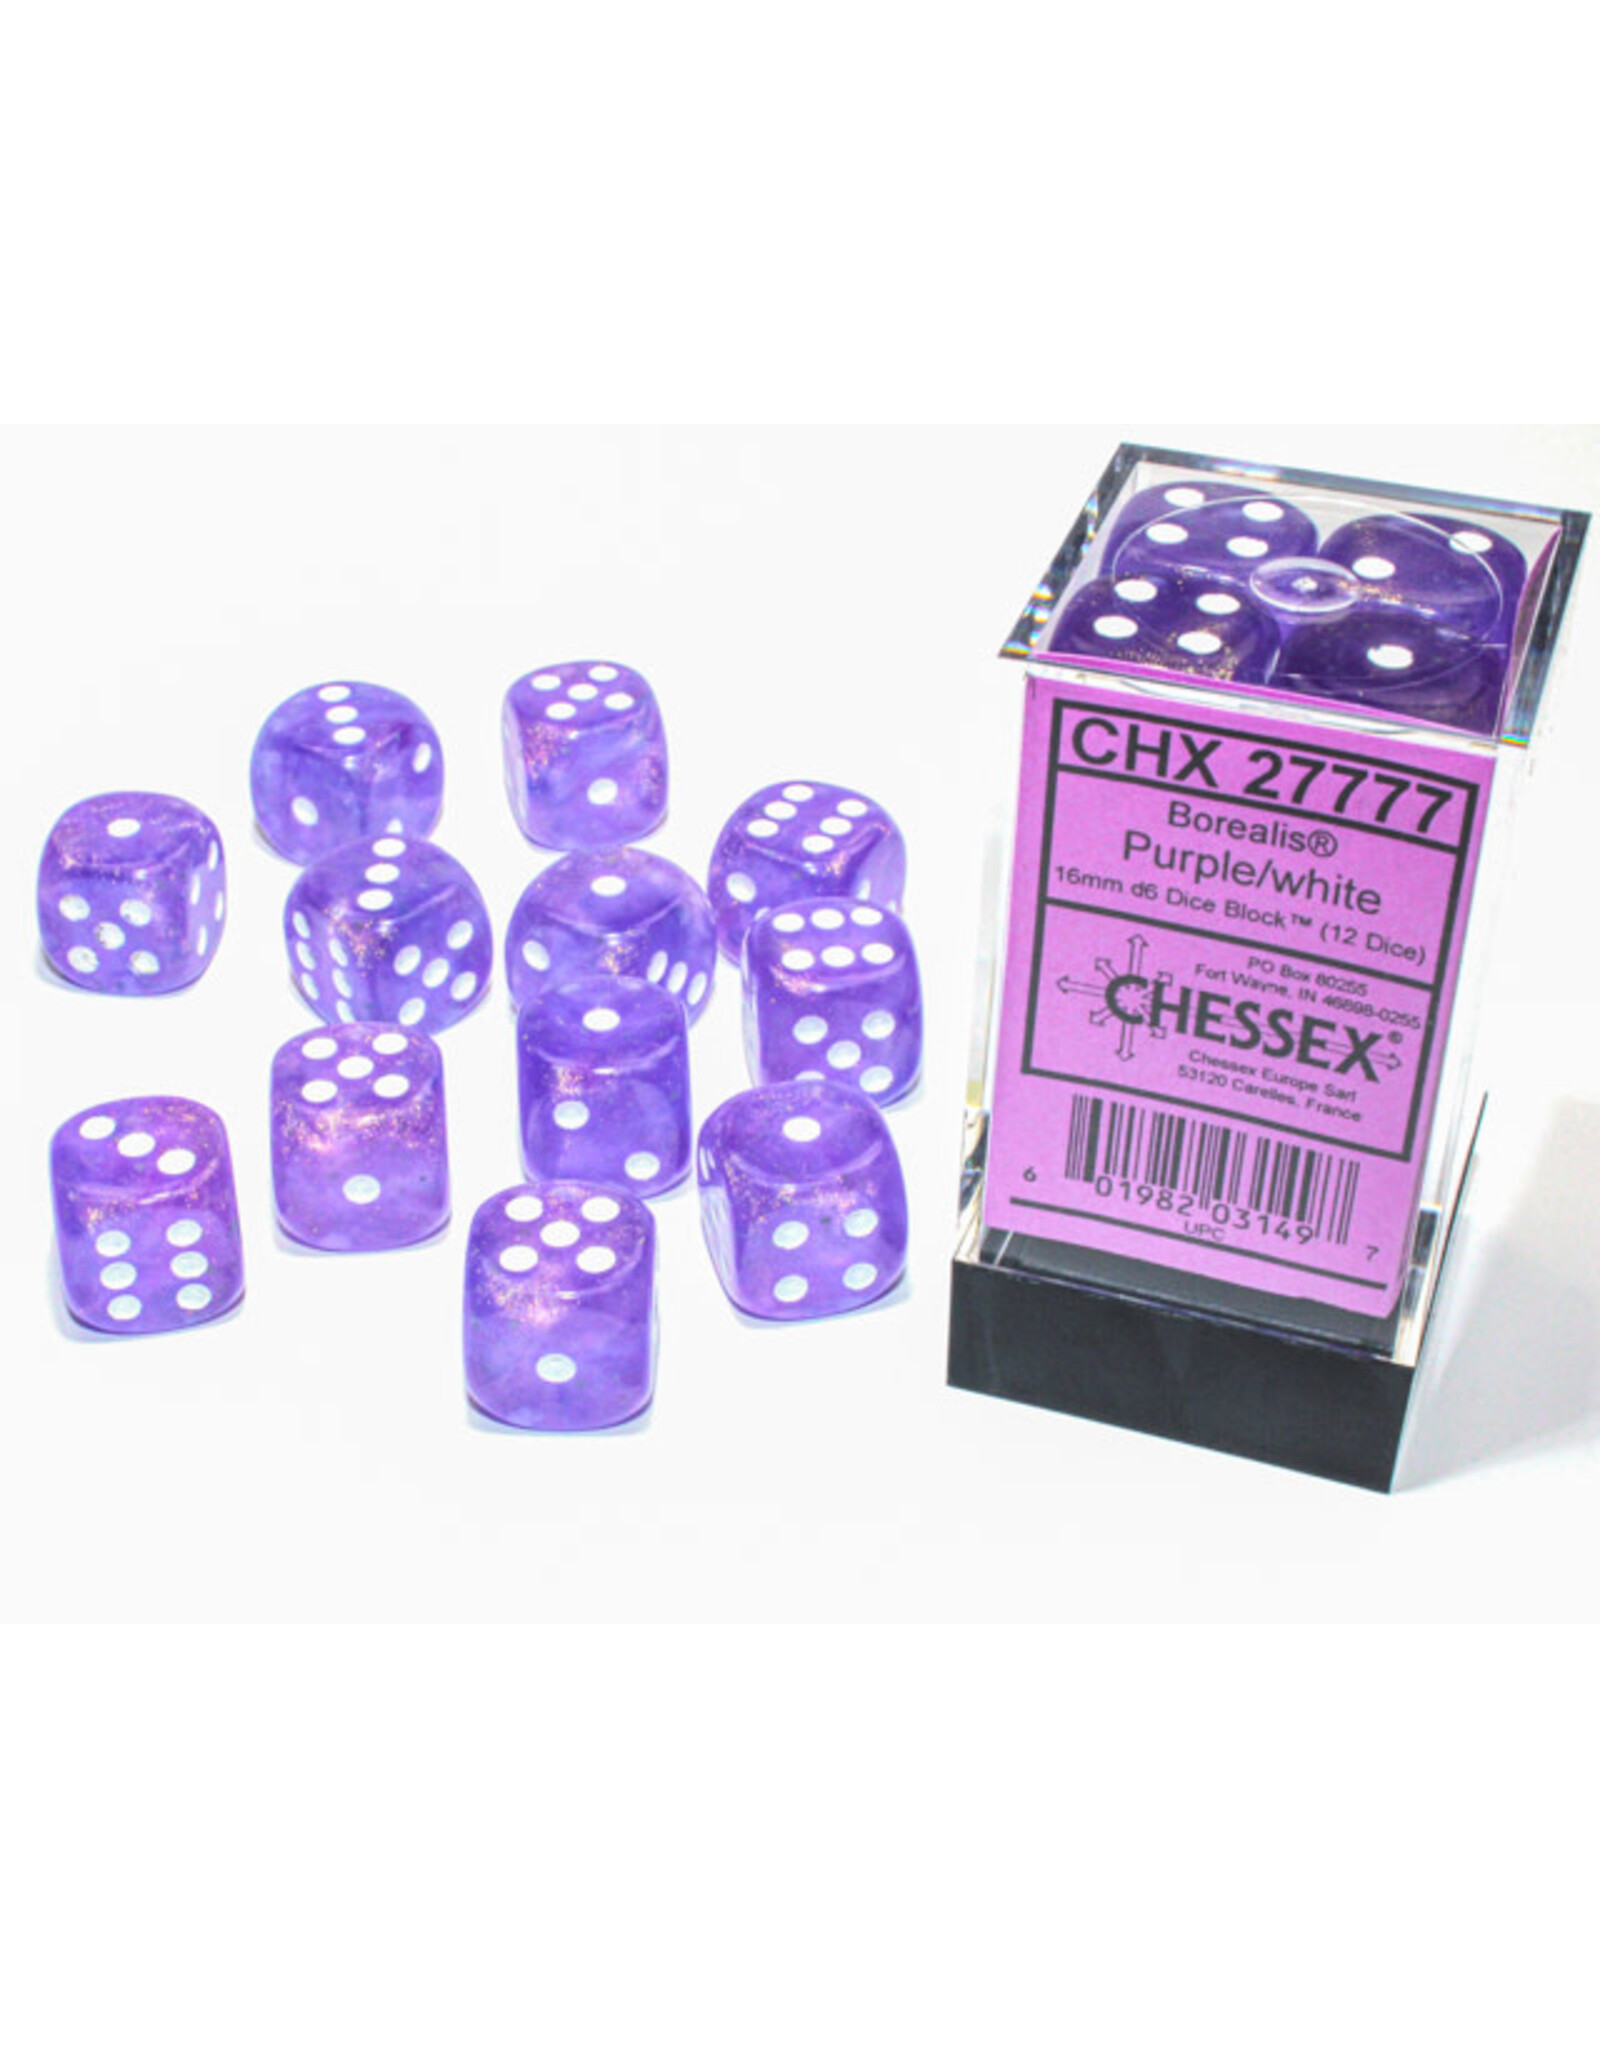 Chessex Borealis Purple/White Dice [12D6]